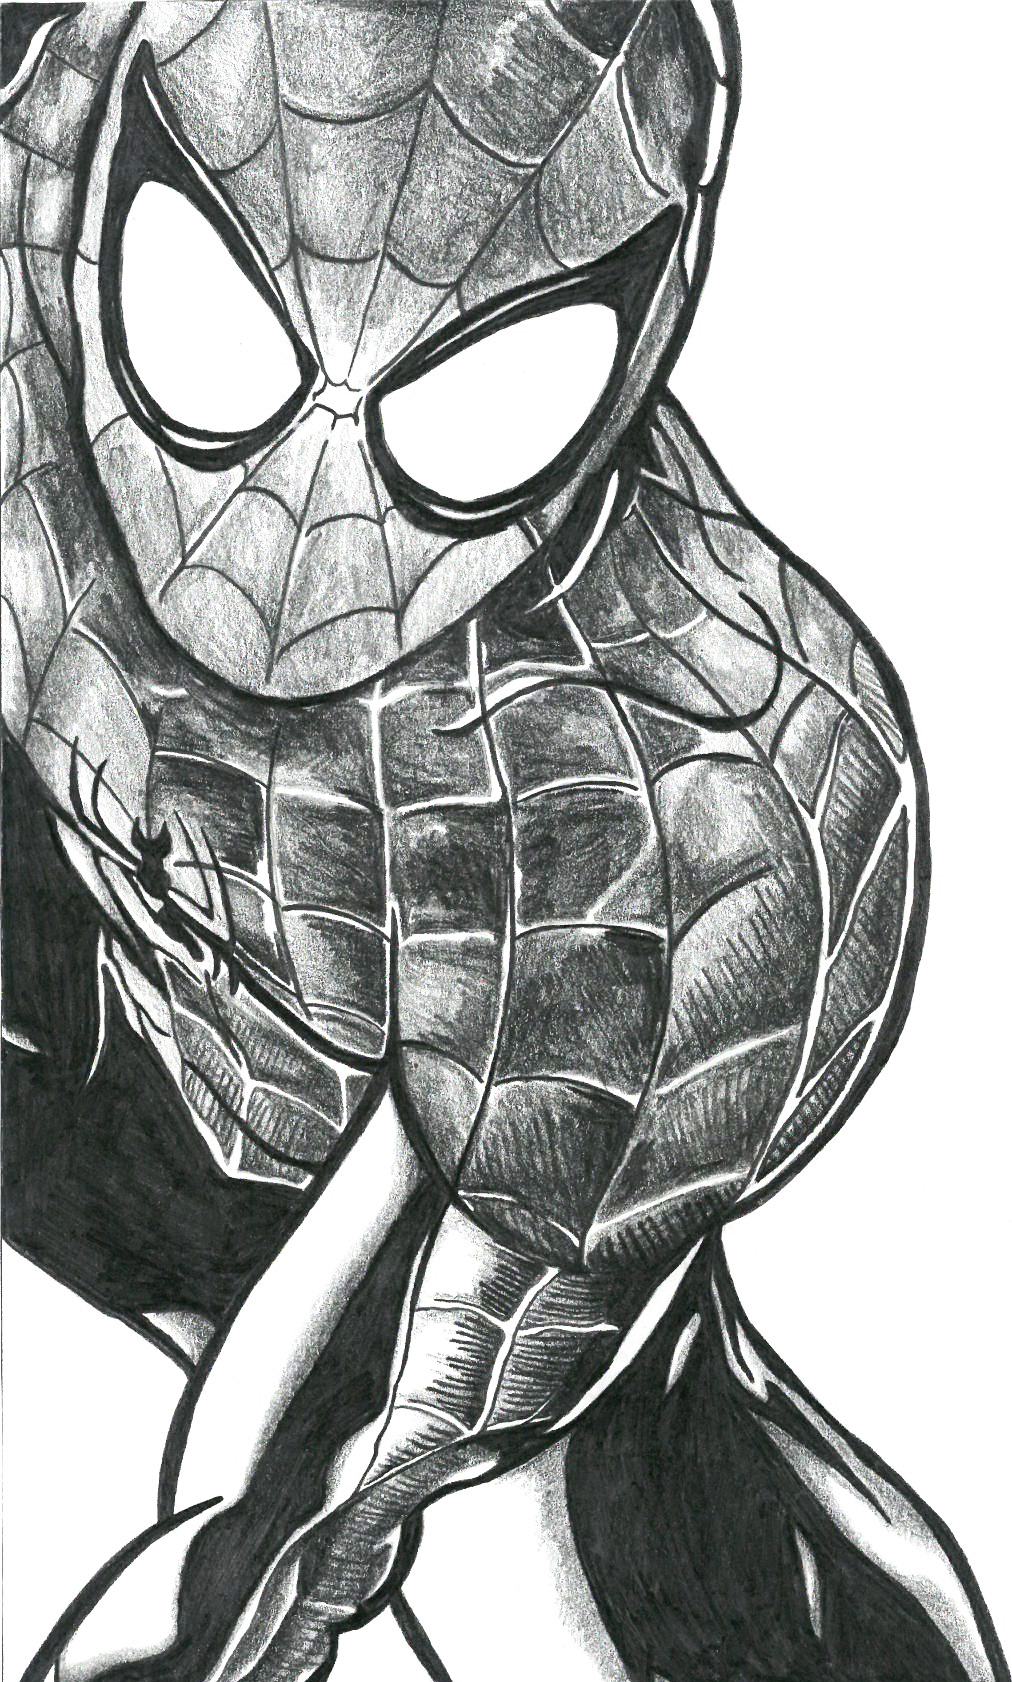 Spiderman Pencil Sketch at Explore collection of